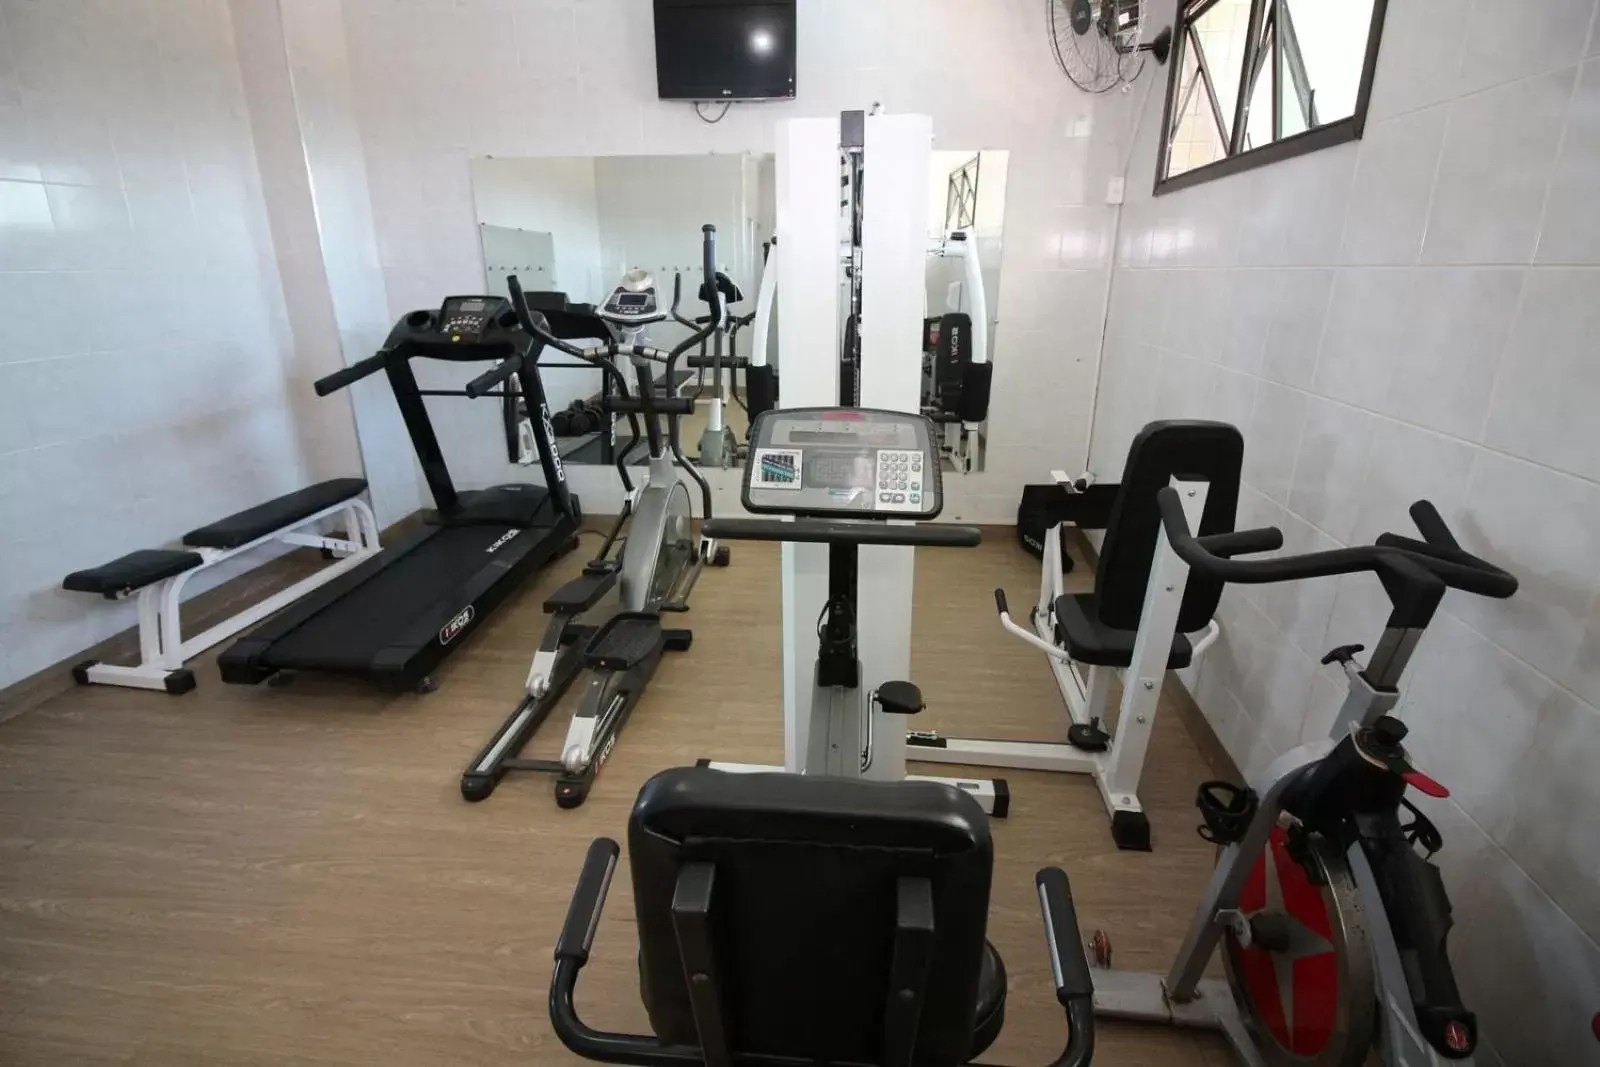 Fitness centre/facilities, Fitness Center/Facilities in Carlton Plaza São José dos Campos